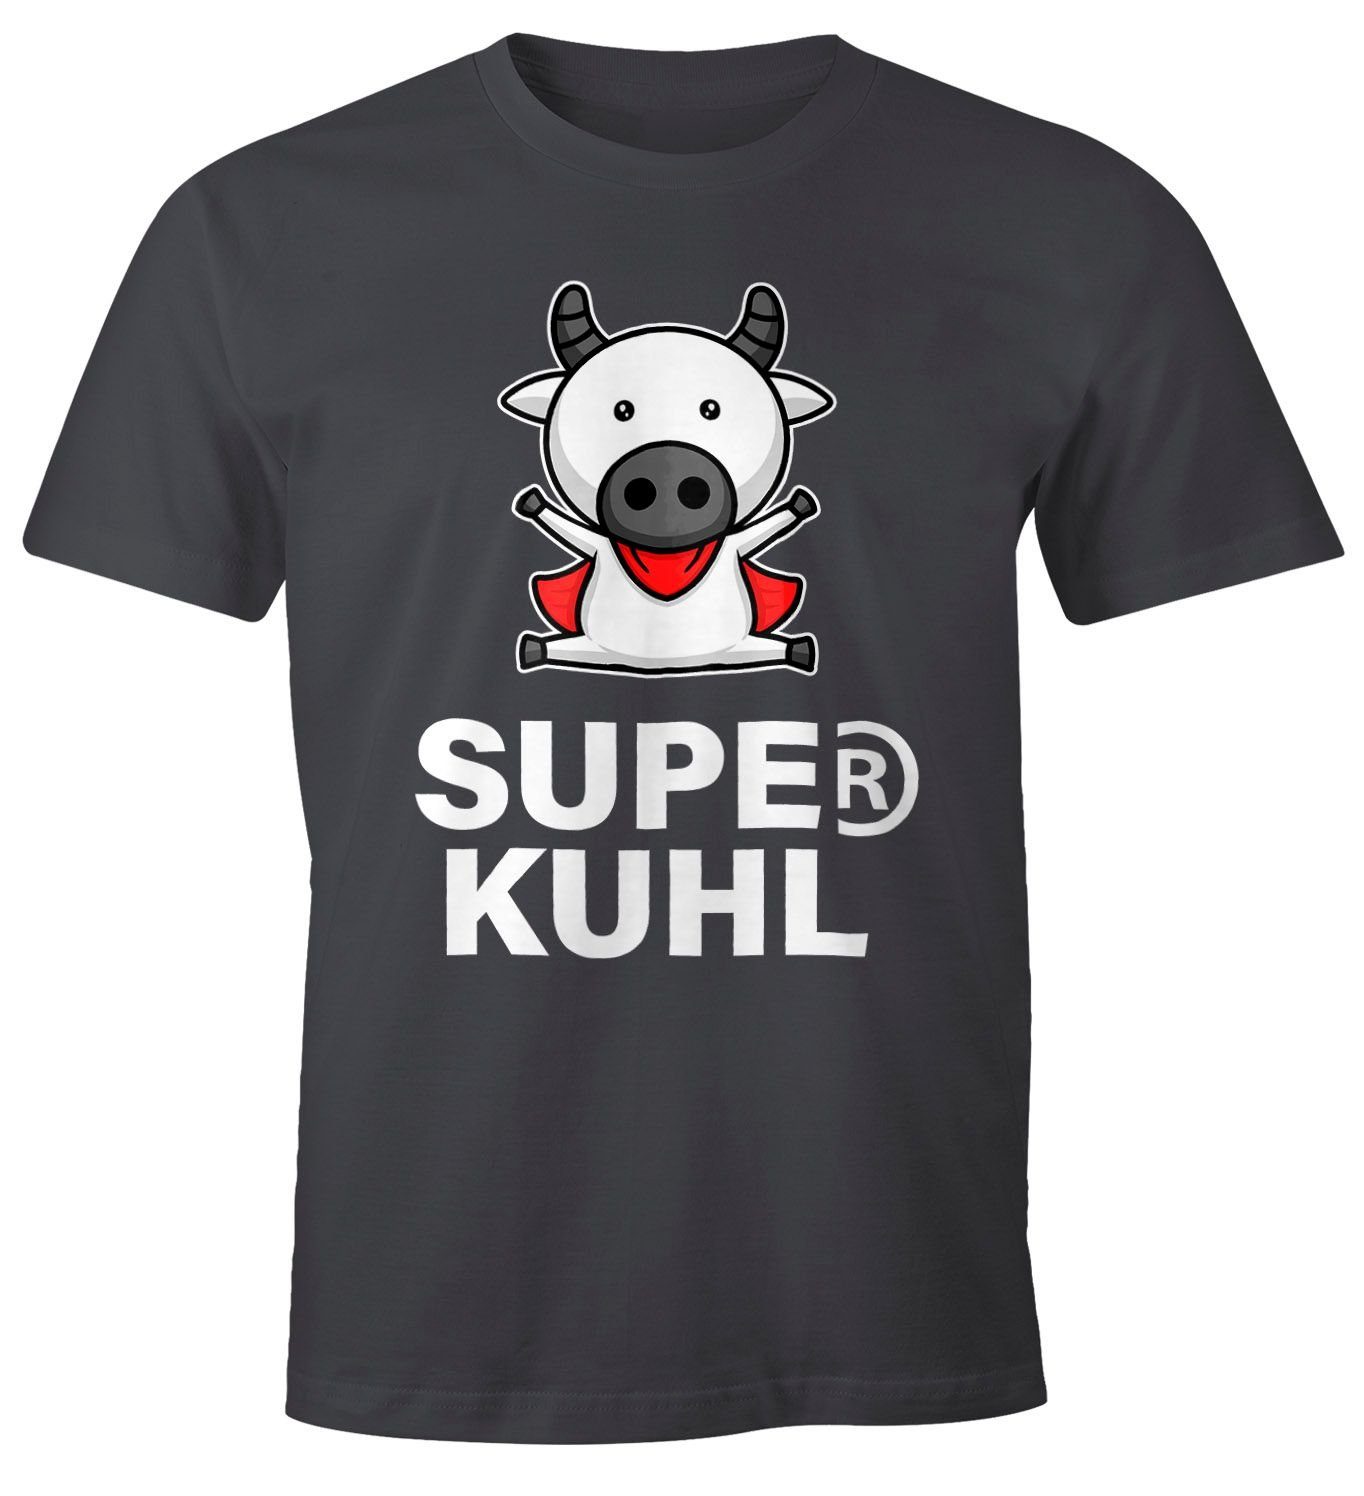 MoonWorks Print-Shirt Lustiges Herren T-Shirt Tier-Motiv Super Kuhl Kuh Fun-Shirt Moonworks® mit Print grau